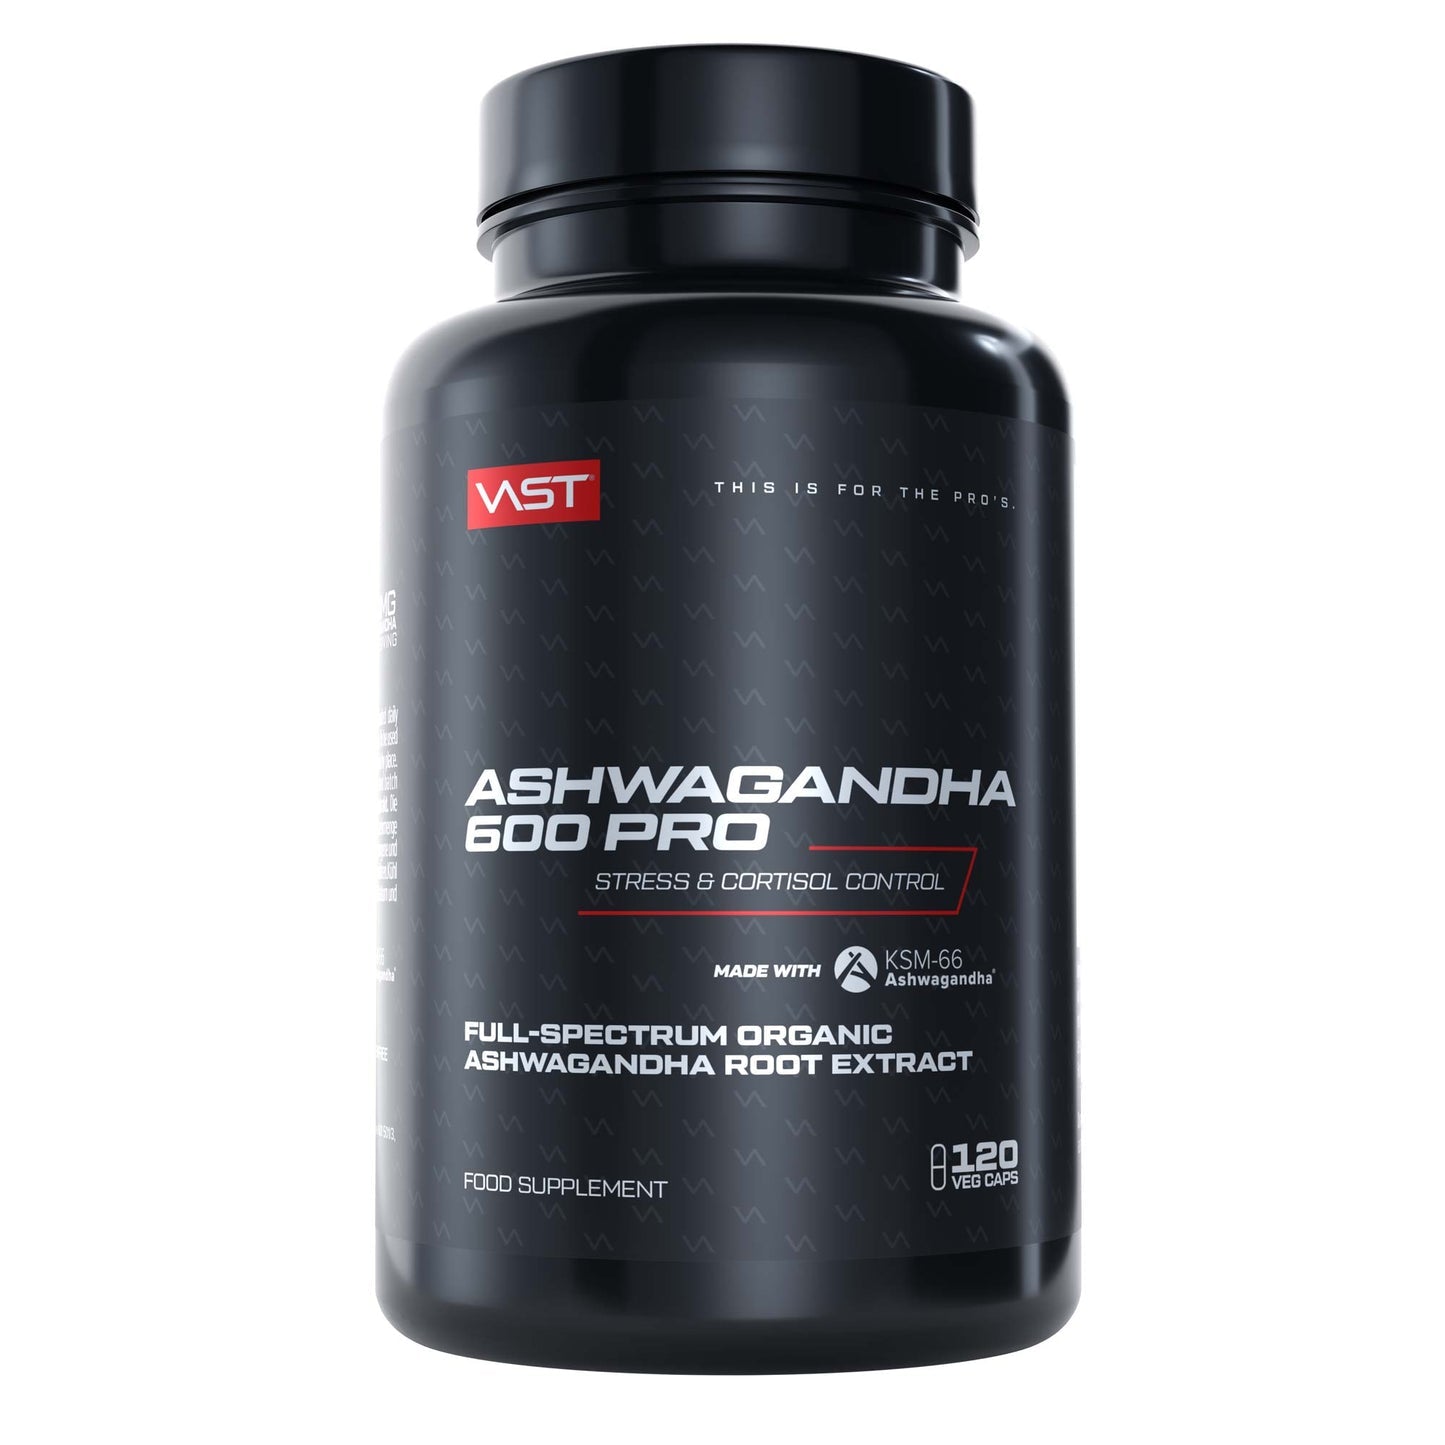 VAST - Ashwagandha 600 Pro - Vegan - 120 Caps - Stress und Cortisol Control